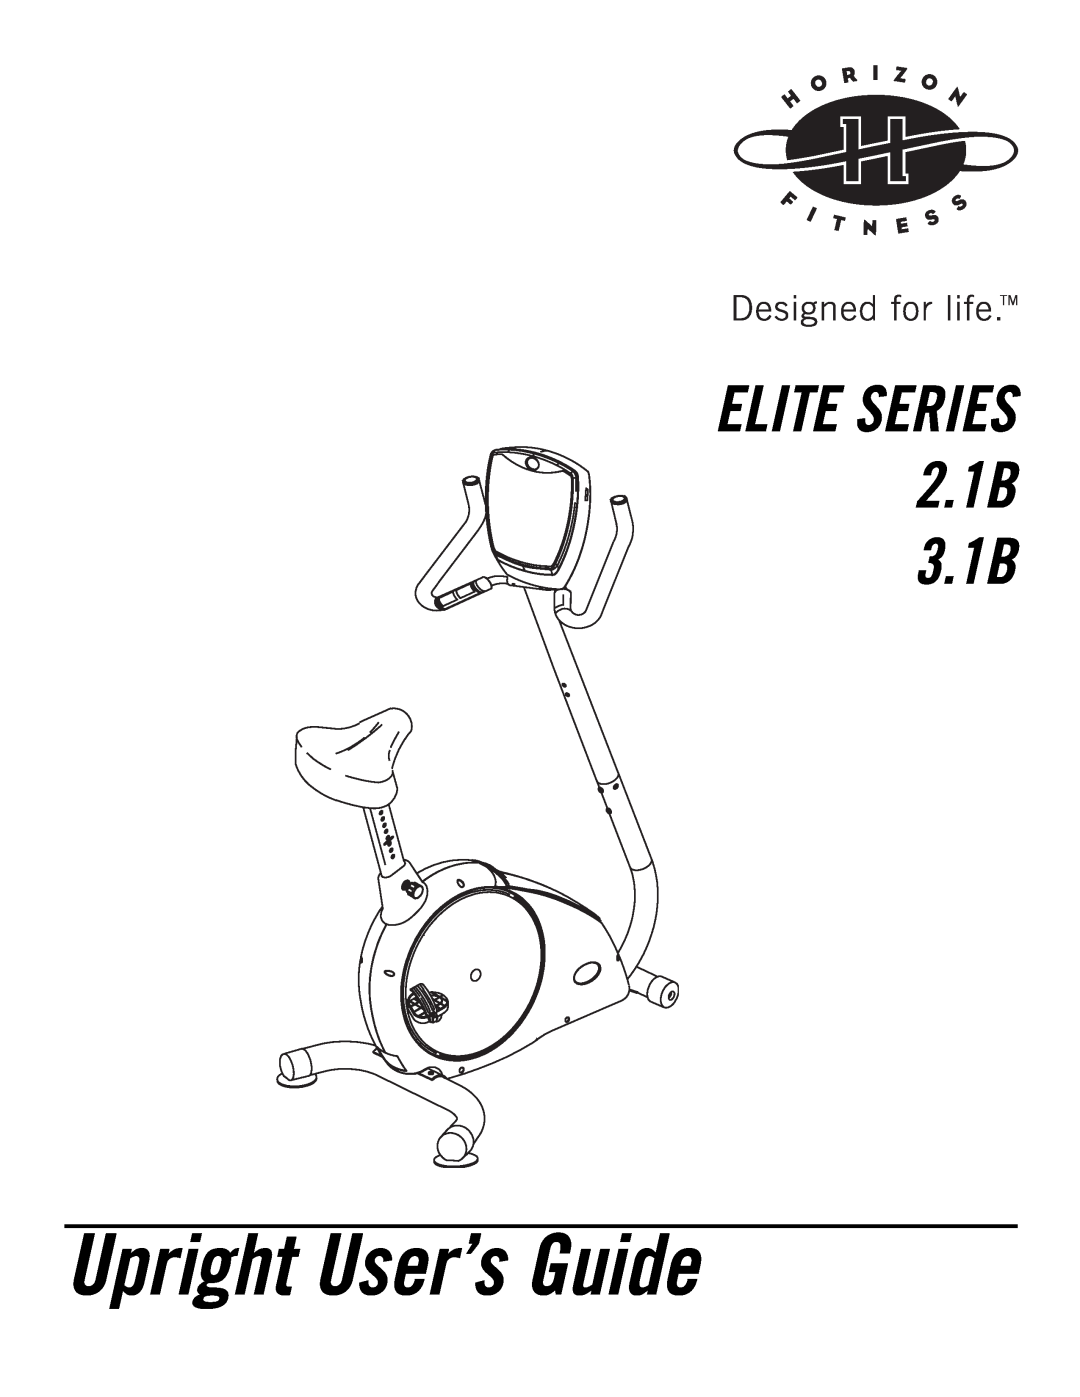 Horizon Fitness manual Upright User’s Guide, ELITE SERIES 2.1B 3.1B 